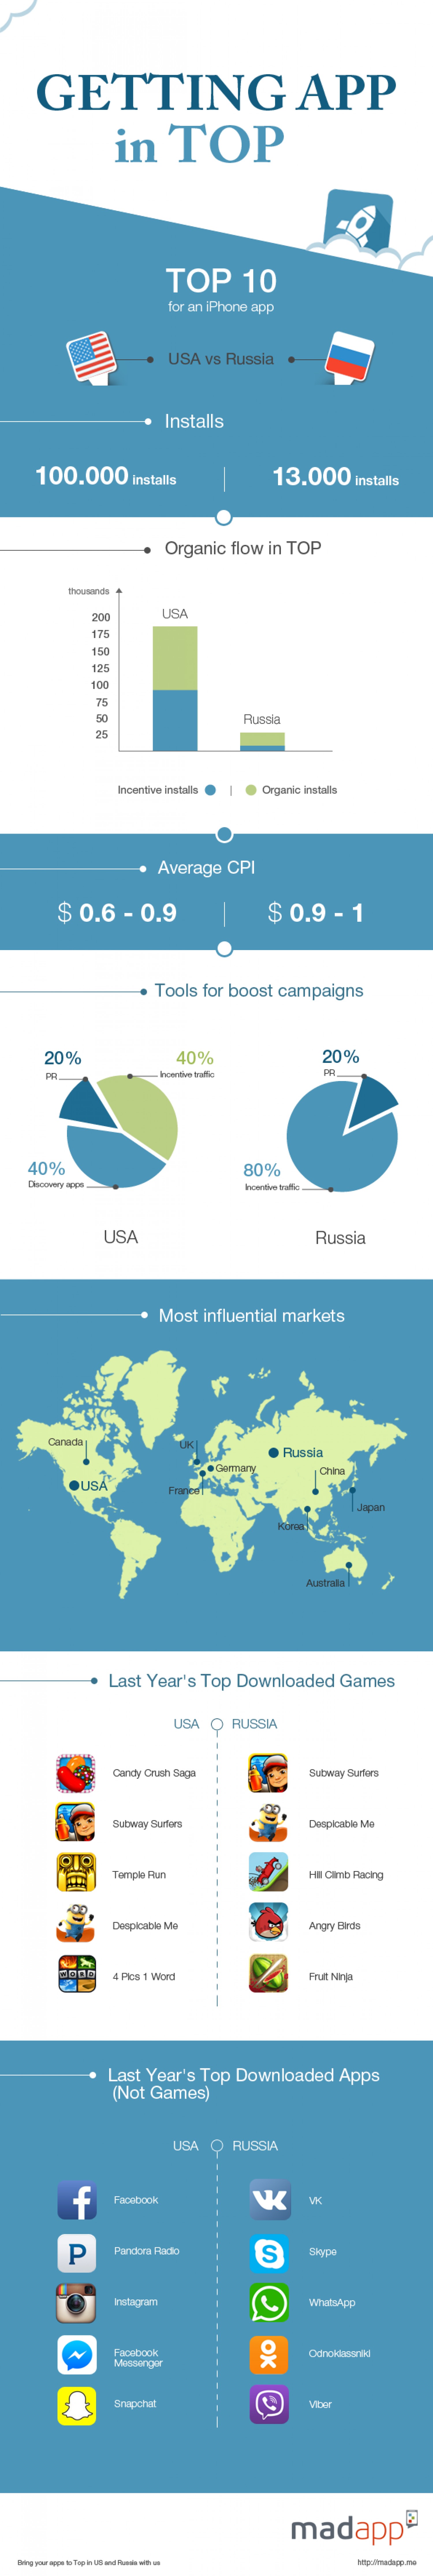 getting-app-in-top-in-usa-and-russia-biggest-markets-comparison_5469c8df7ea56_w1500